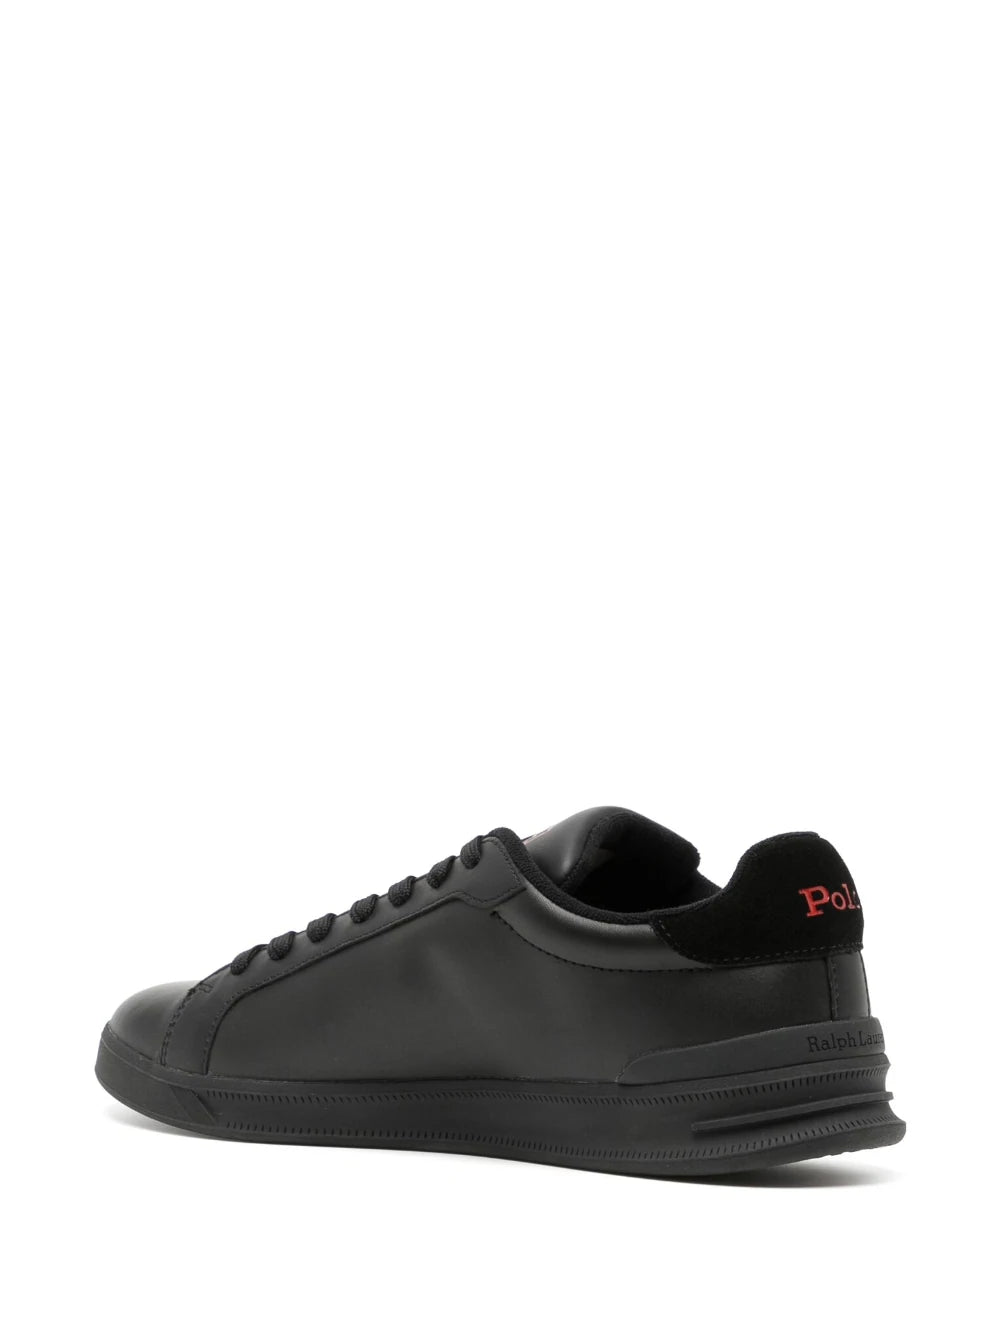 Ralph Lauren Leather Sneakers Low Top Lace | Black